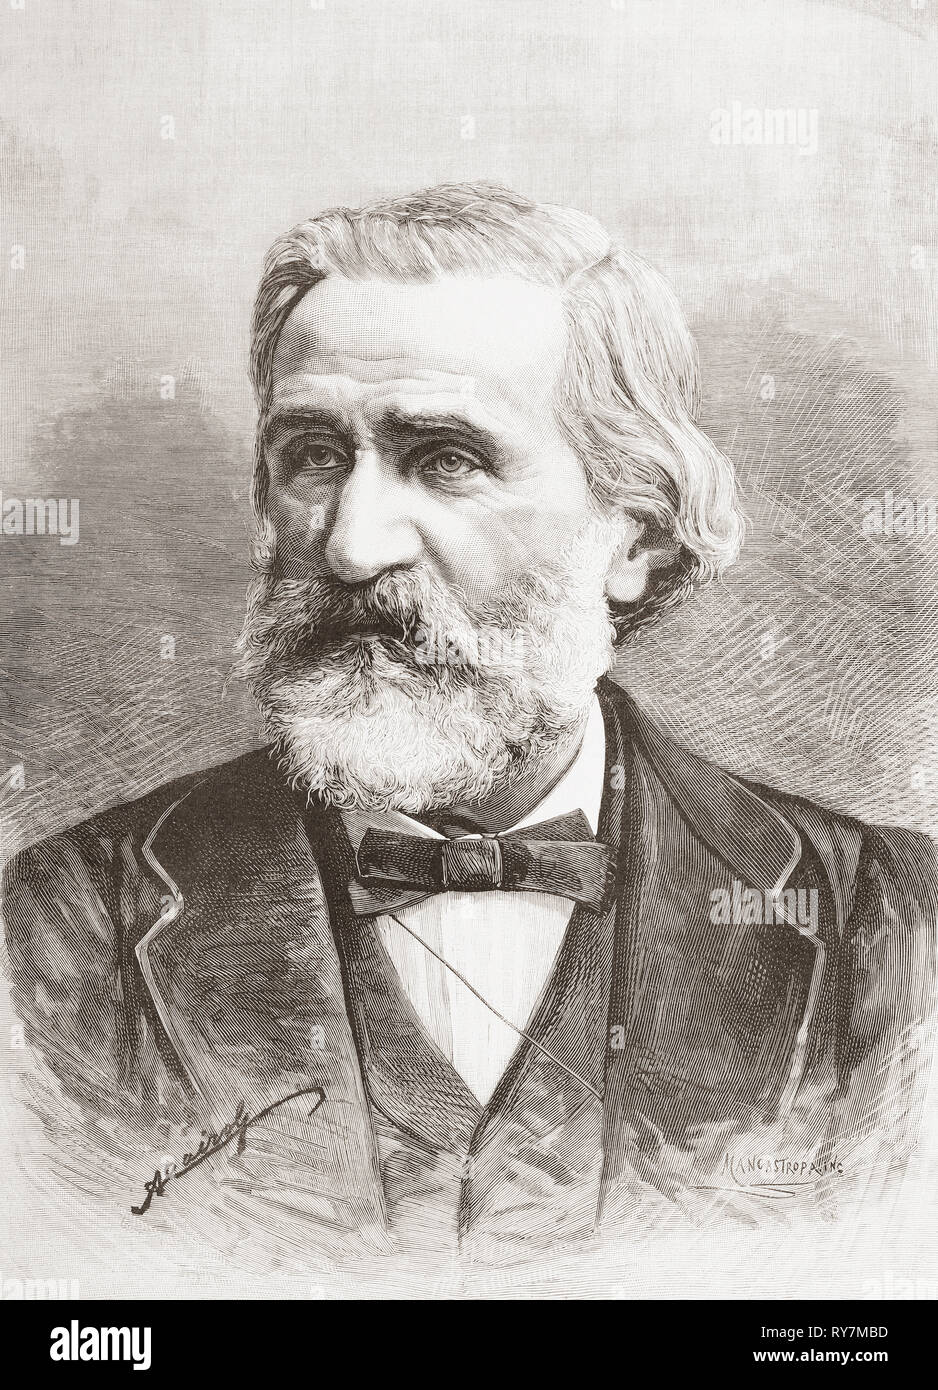 Giuseppe Fortunino Francesco Verdi, 1813 – 1901. Italian opera composer.  From Ilustracion Artistica, published 1887. Stock Photo